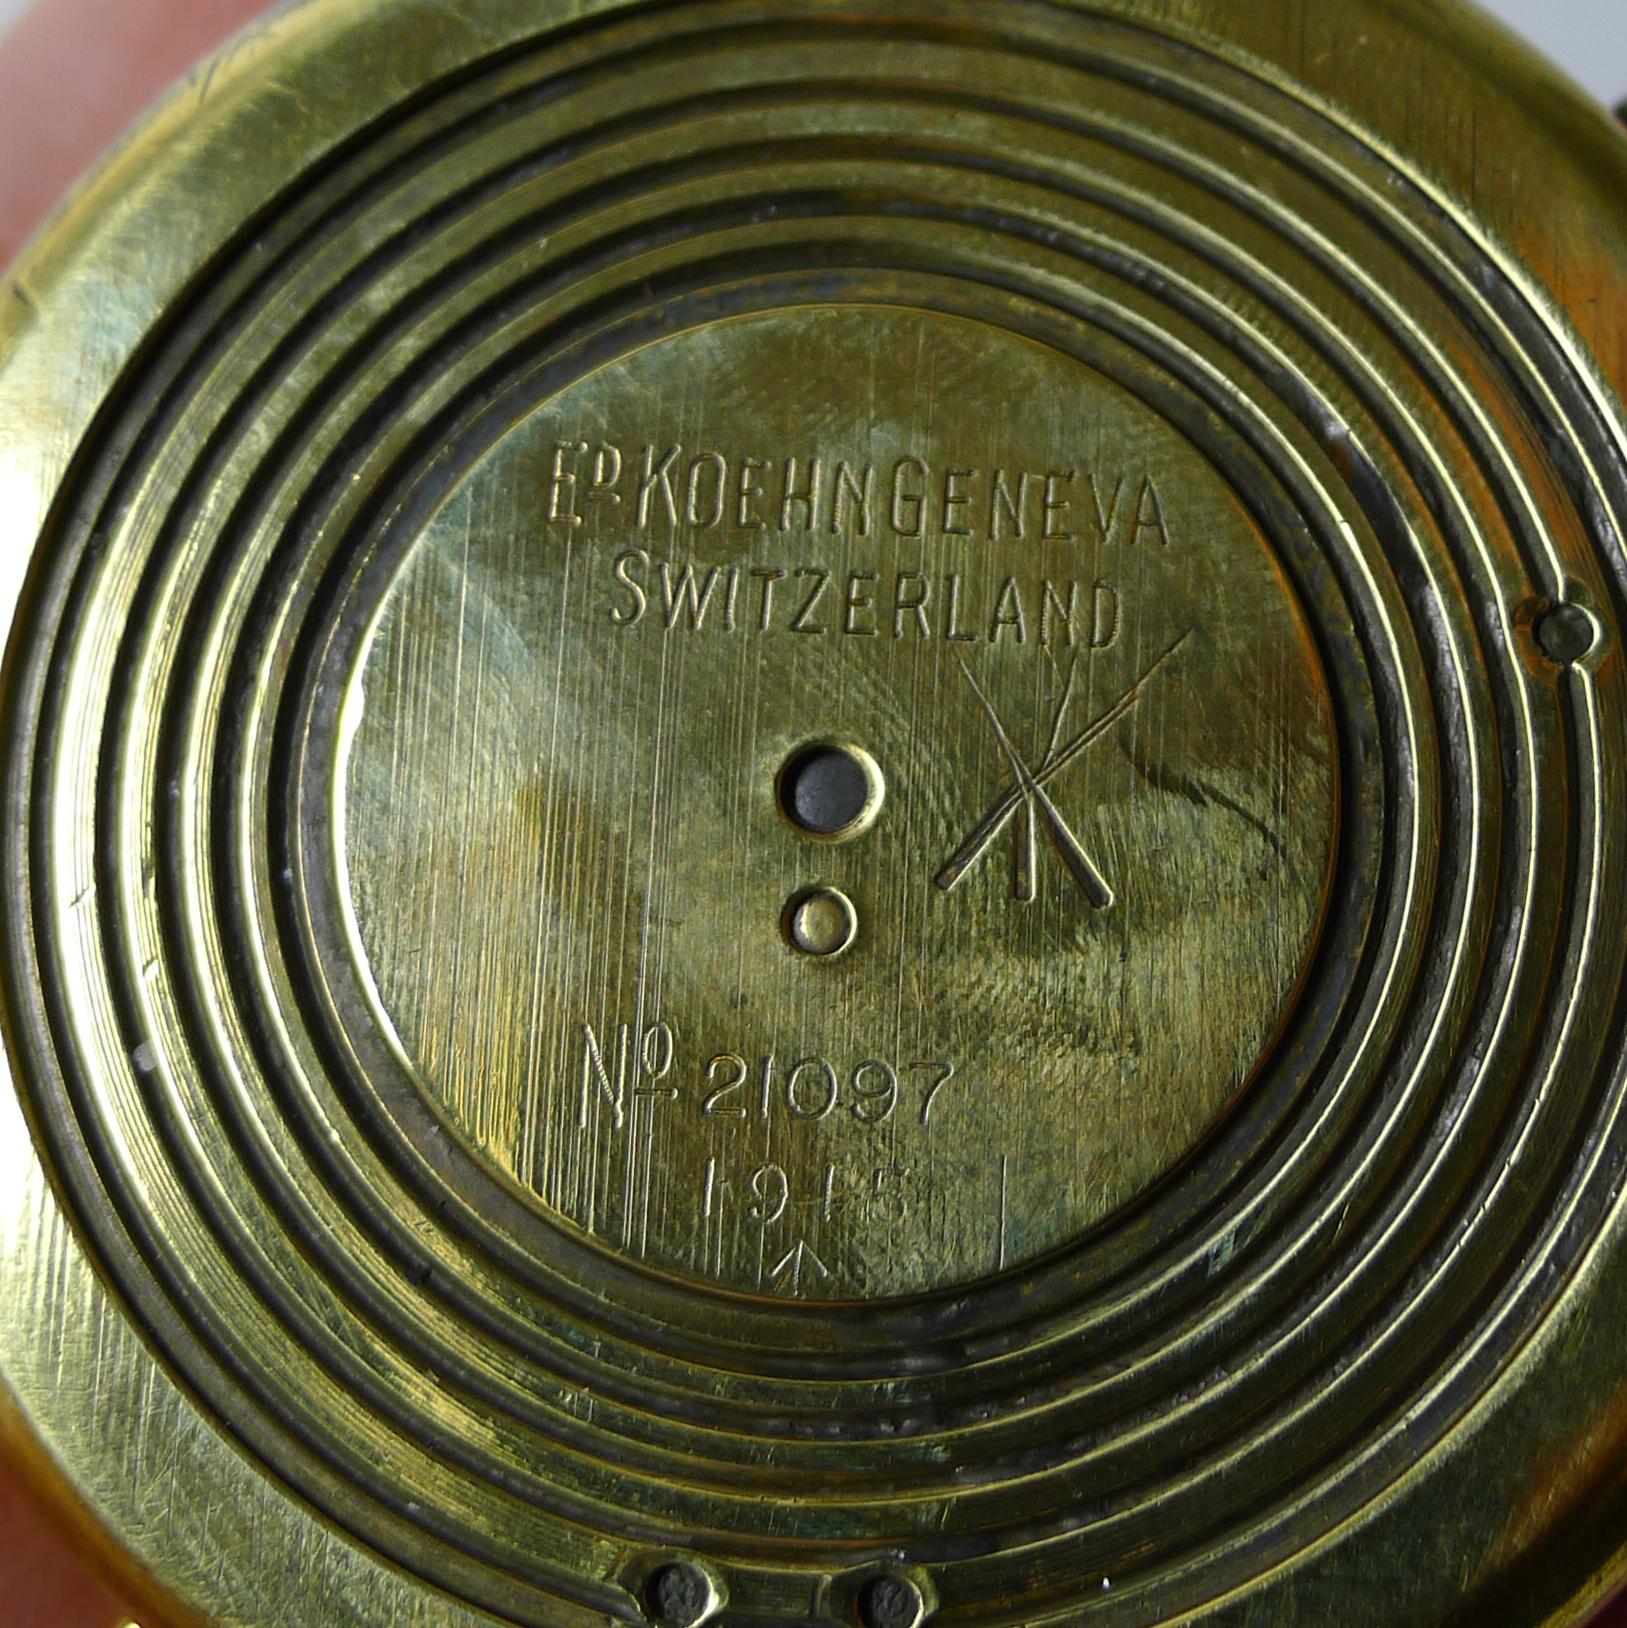 WW1 1915 British Army Officer's Compass - Verner's Patent MK VII by E. Koehn 2